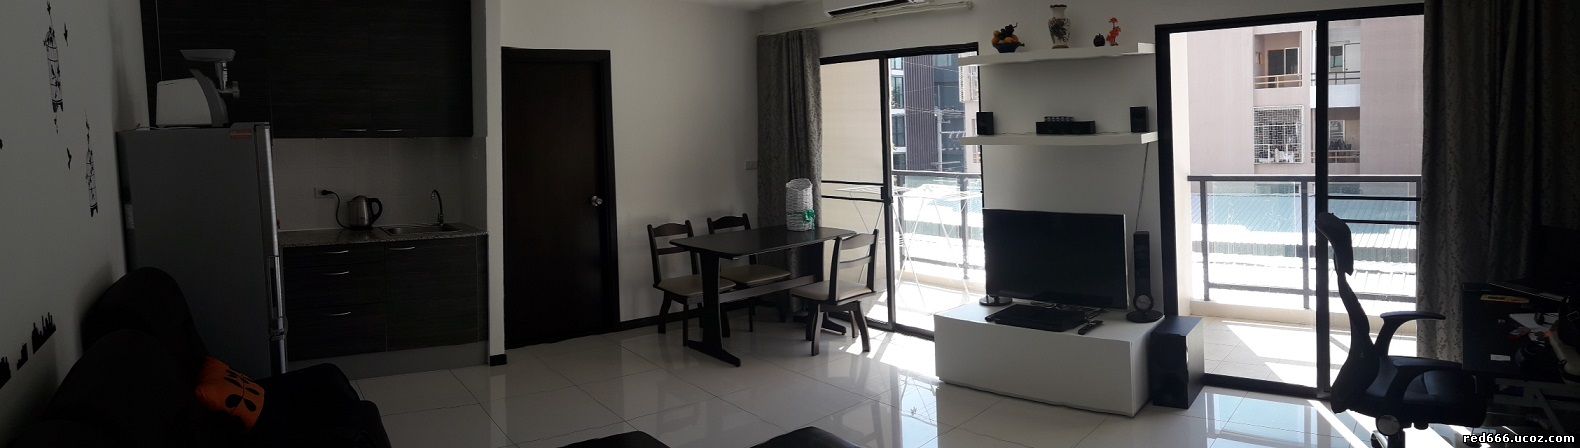 Продам 3-х комнатную квартиру в Таиланде Паттайя